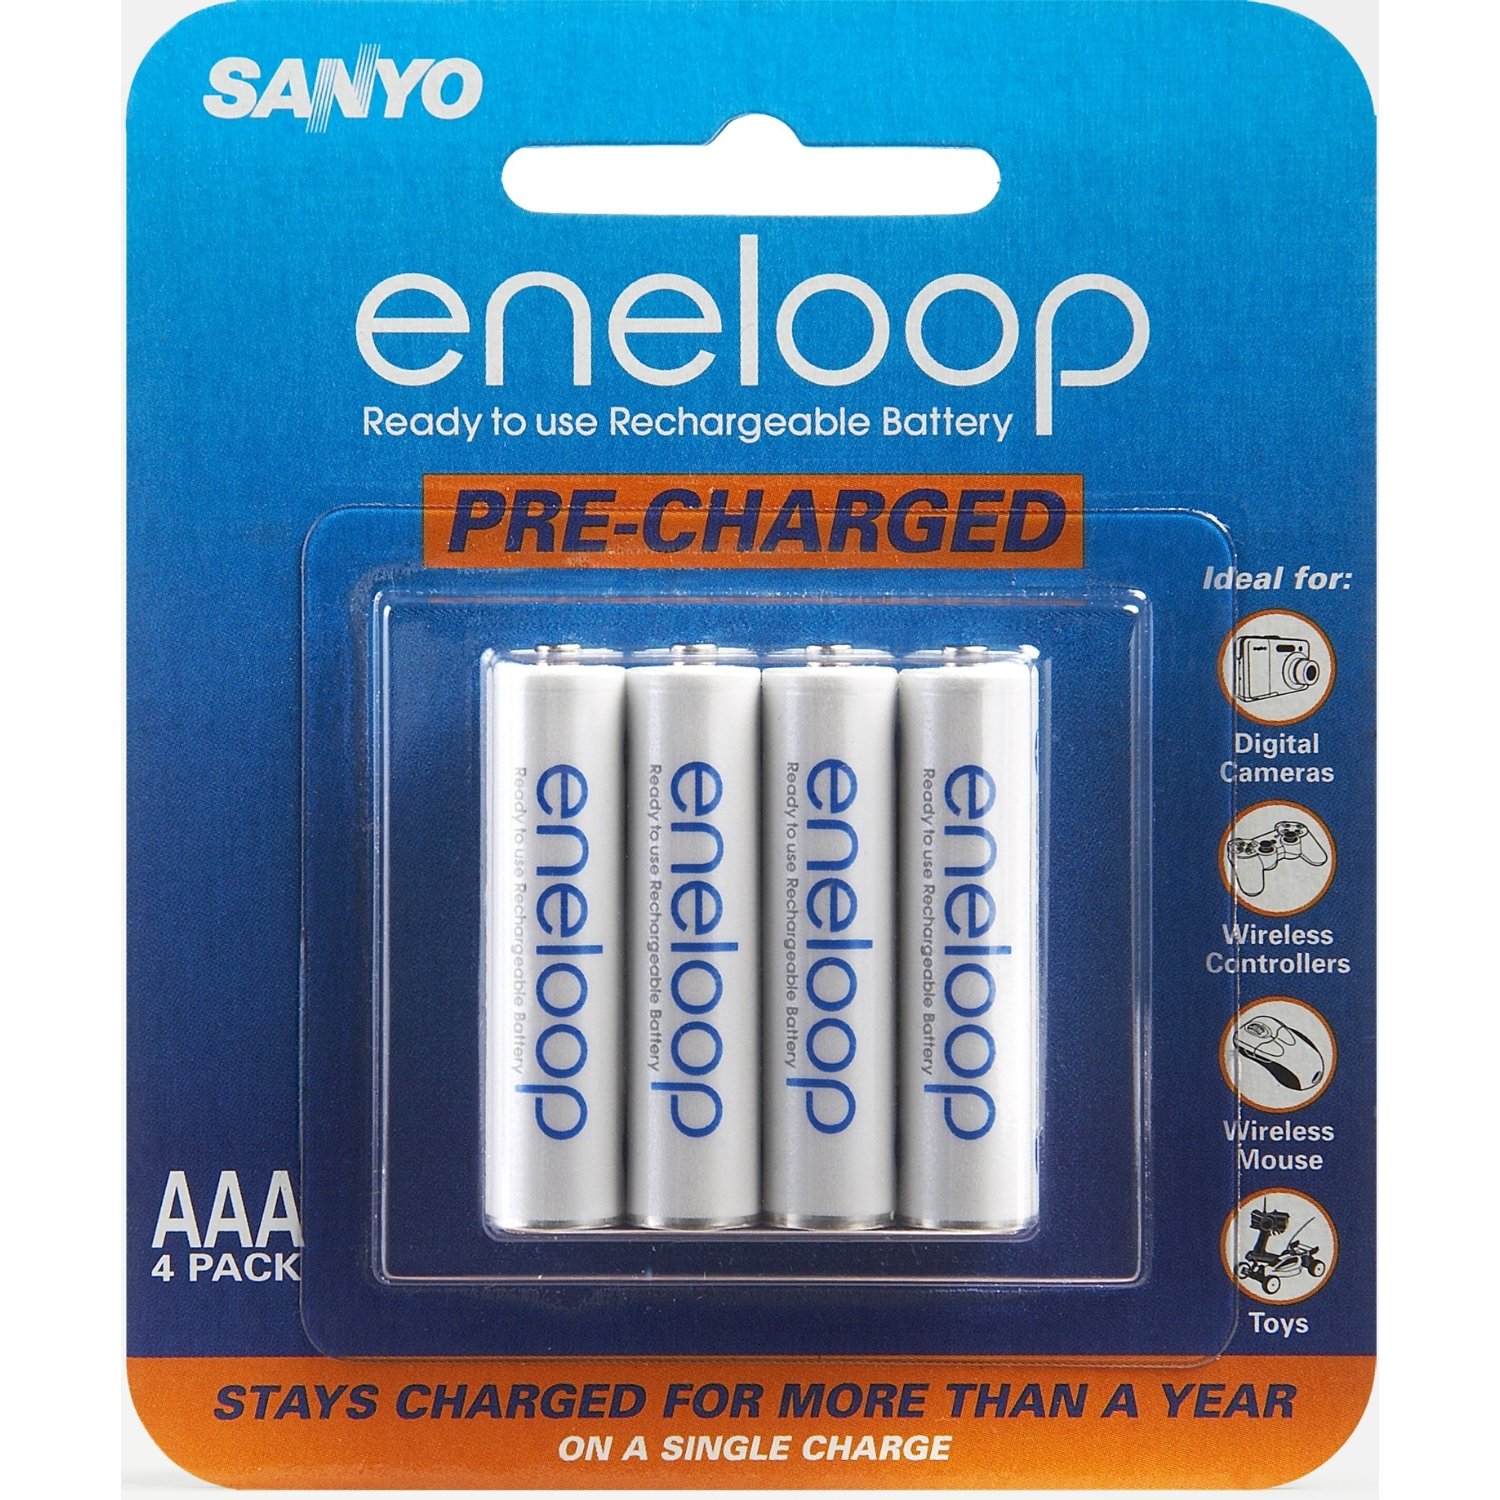 discount eneloop batteries